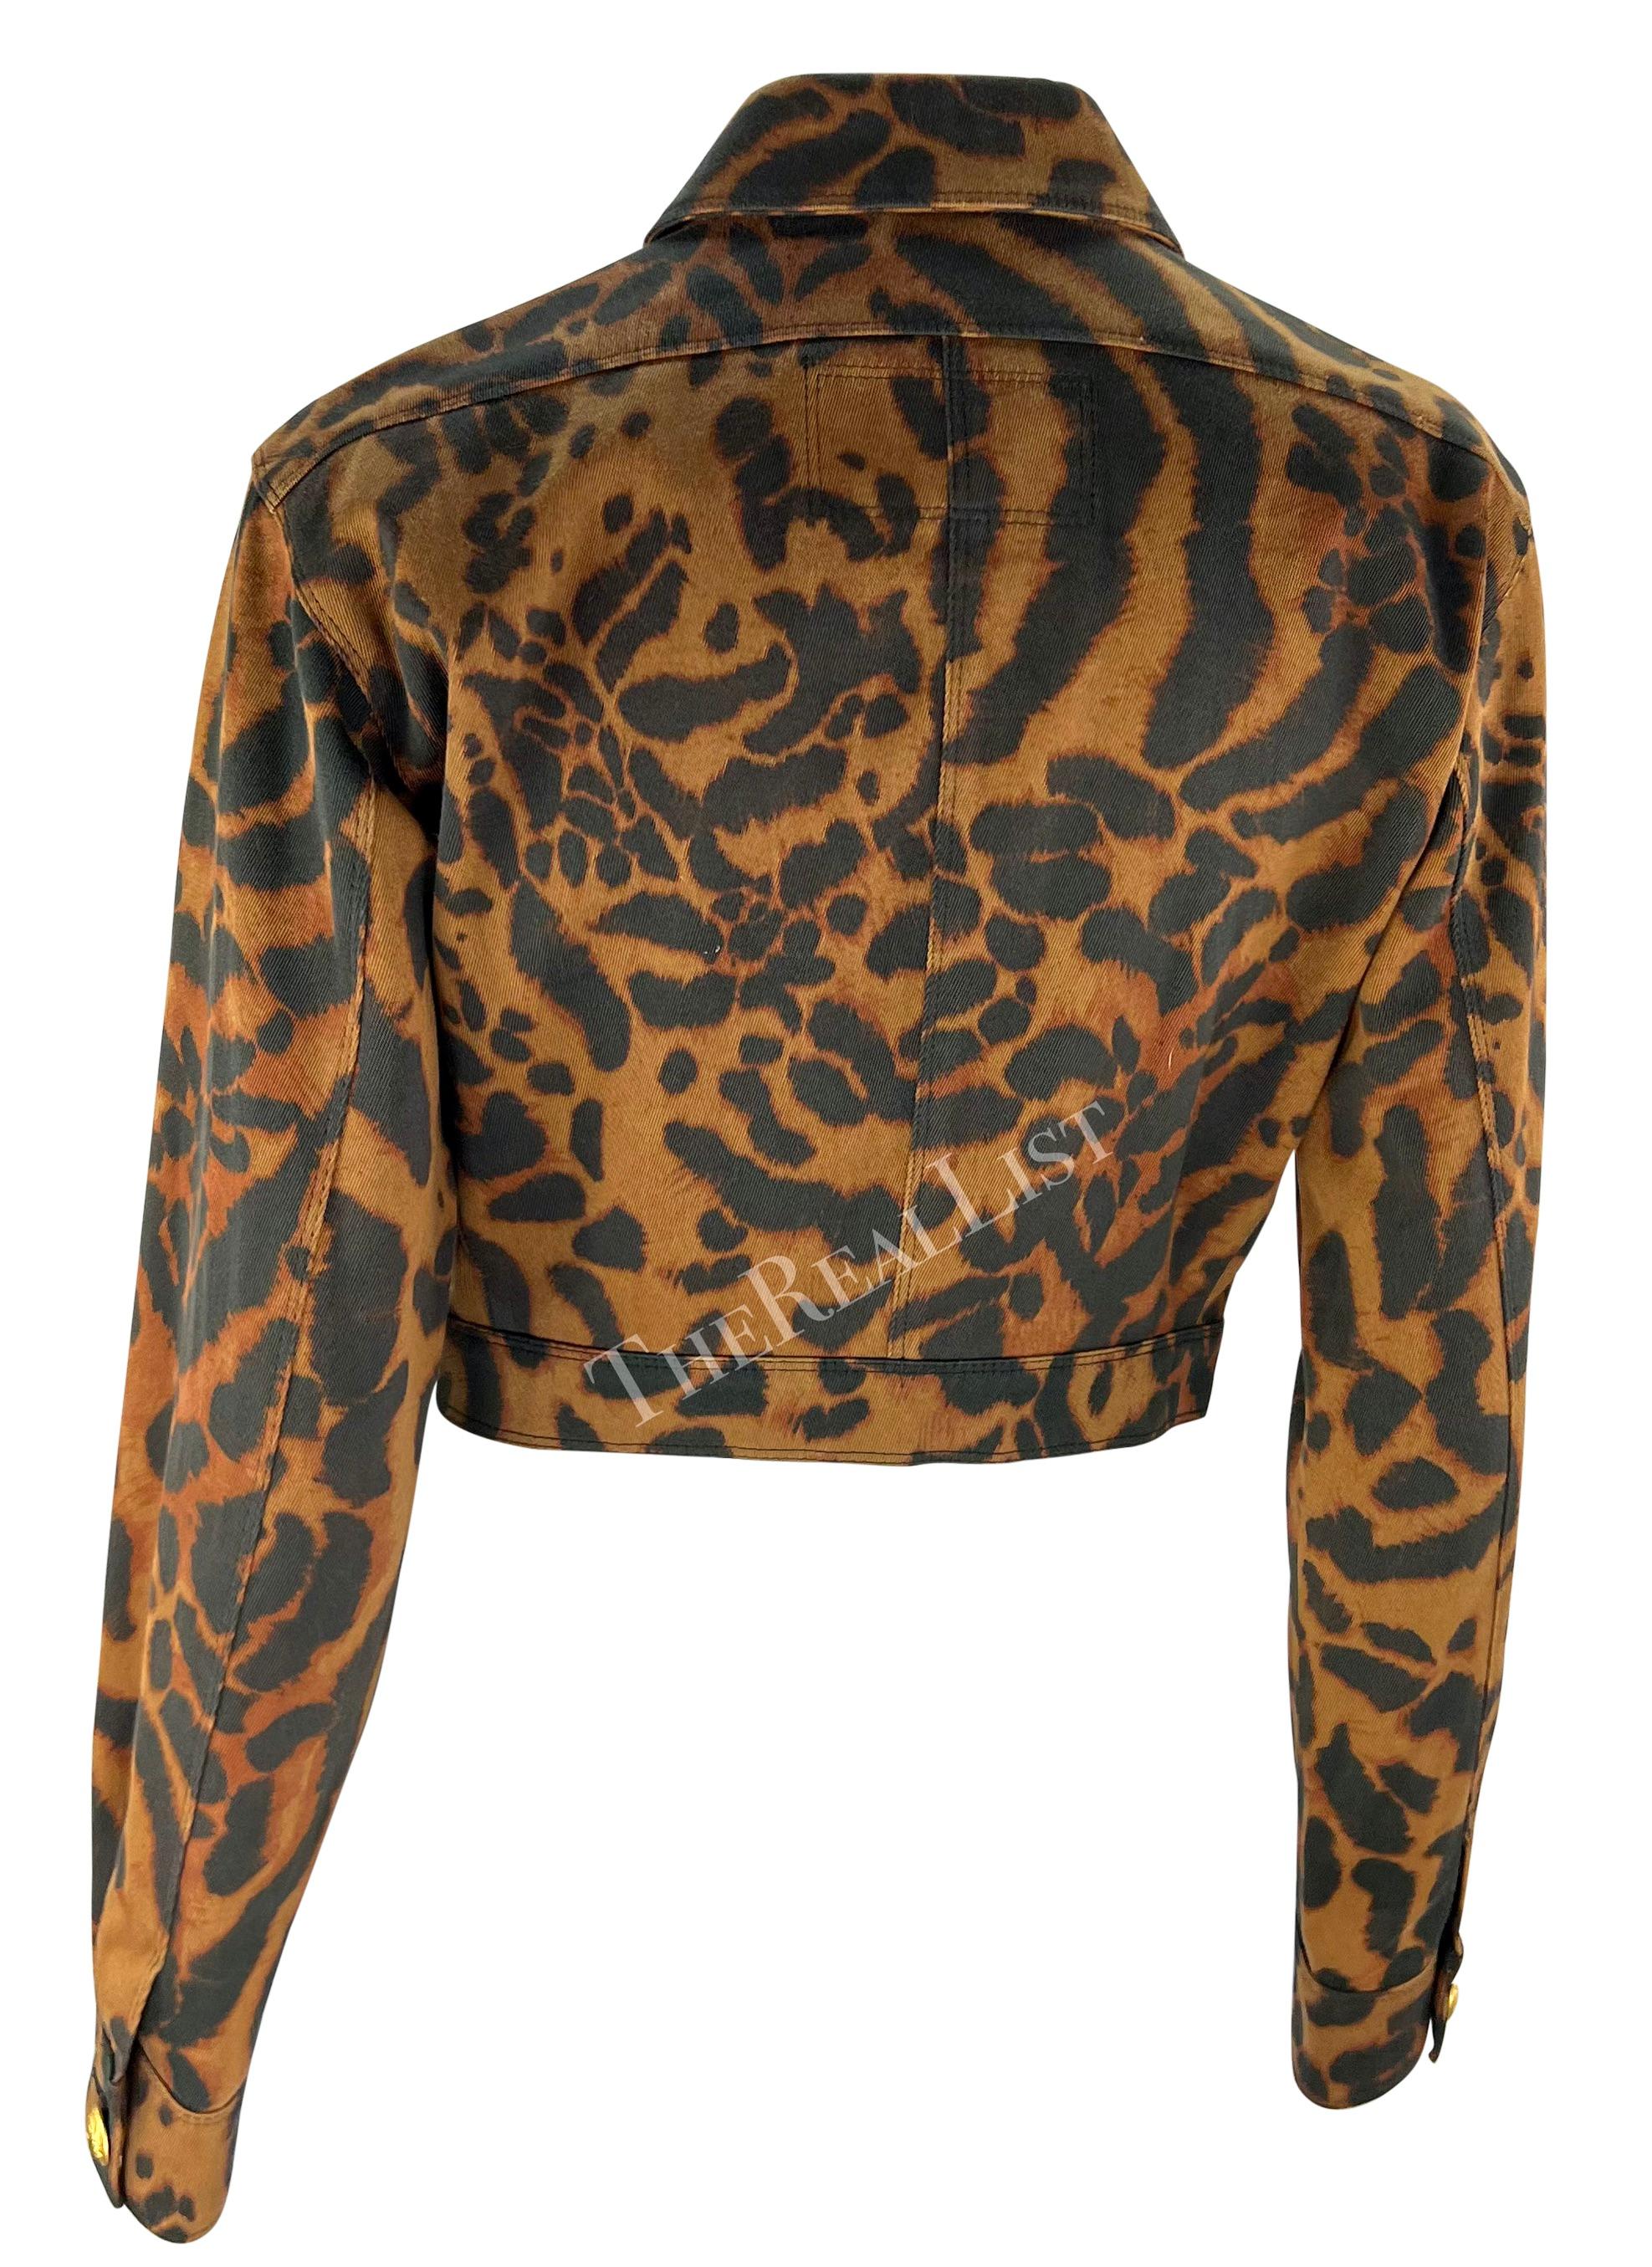 S/S 1992 Gianni Versace Runway Brown Cheetah Print Denim Medusa Cropped Jacket For Sale 5